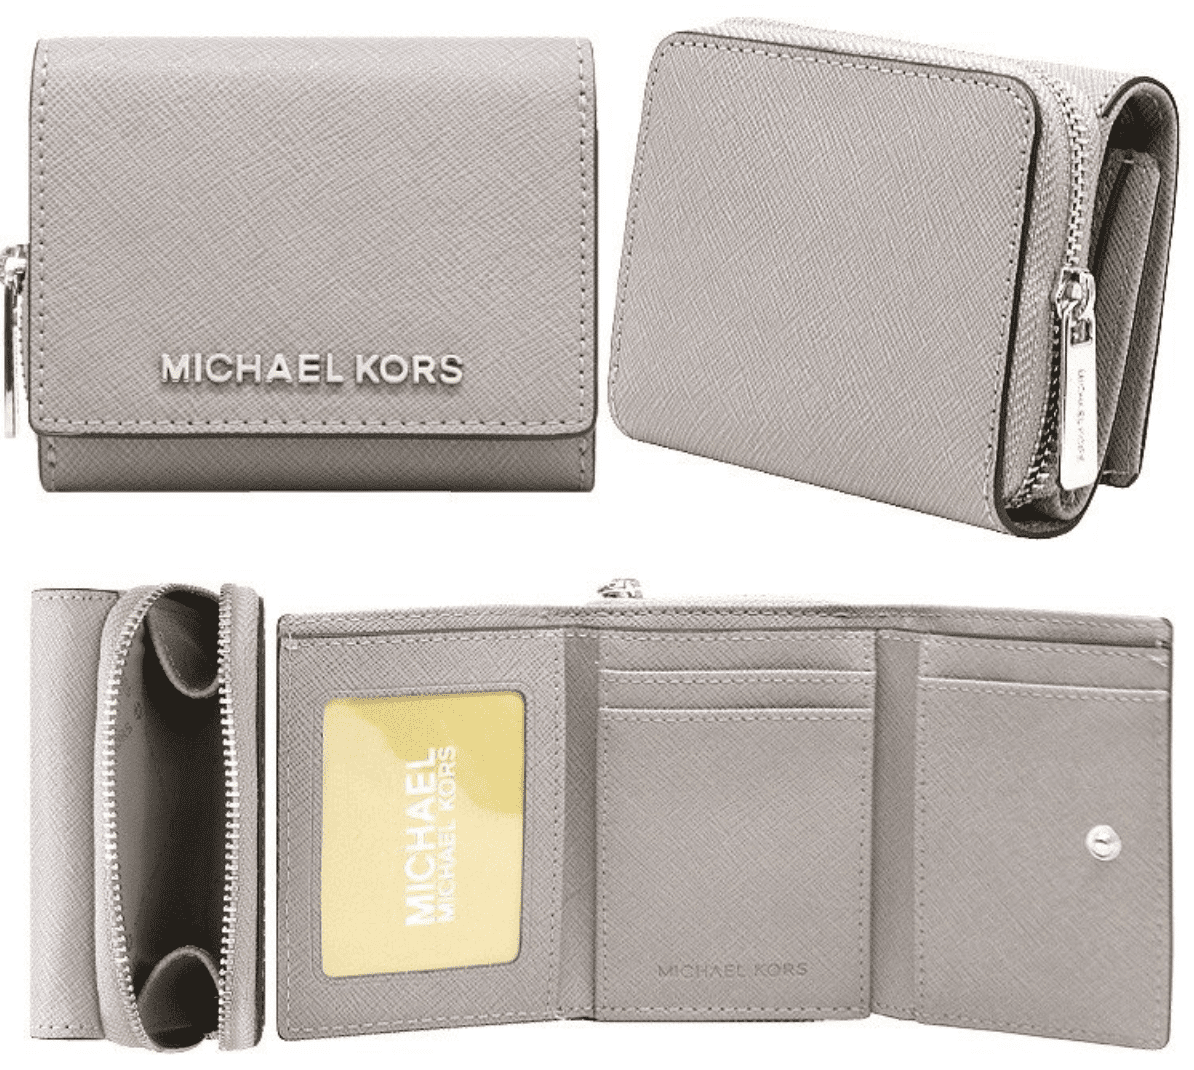 michael kors pearl grey wallet